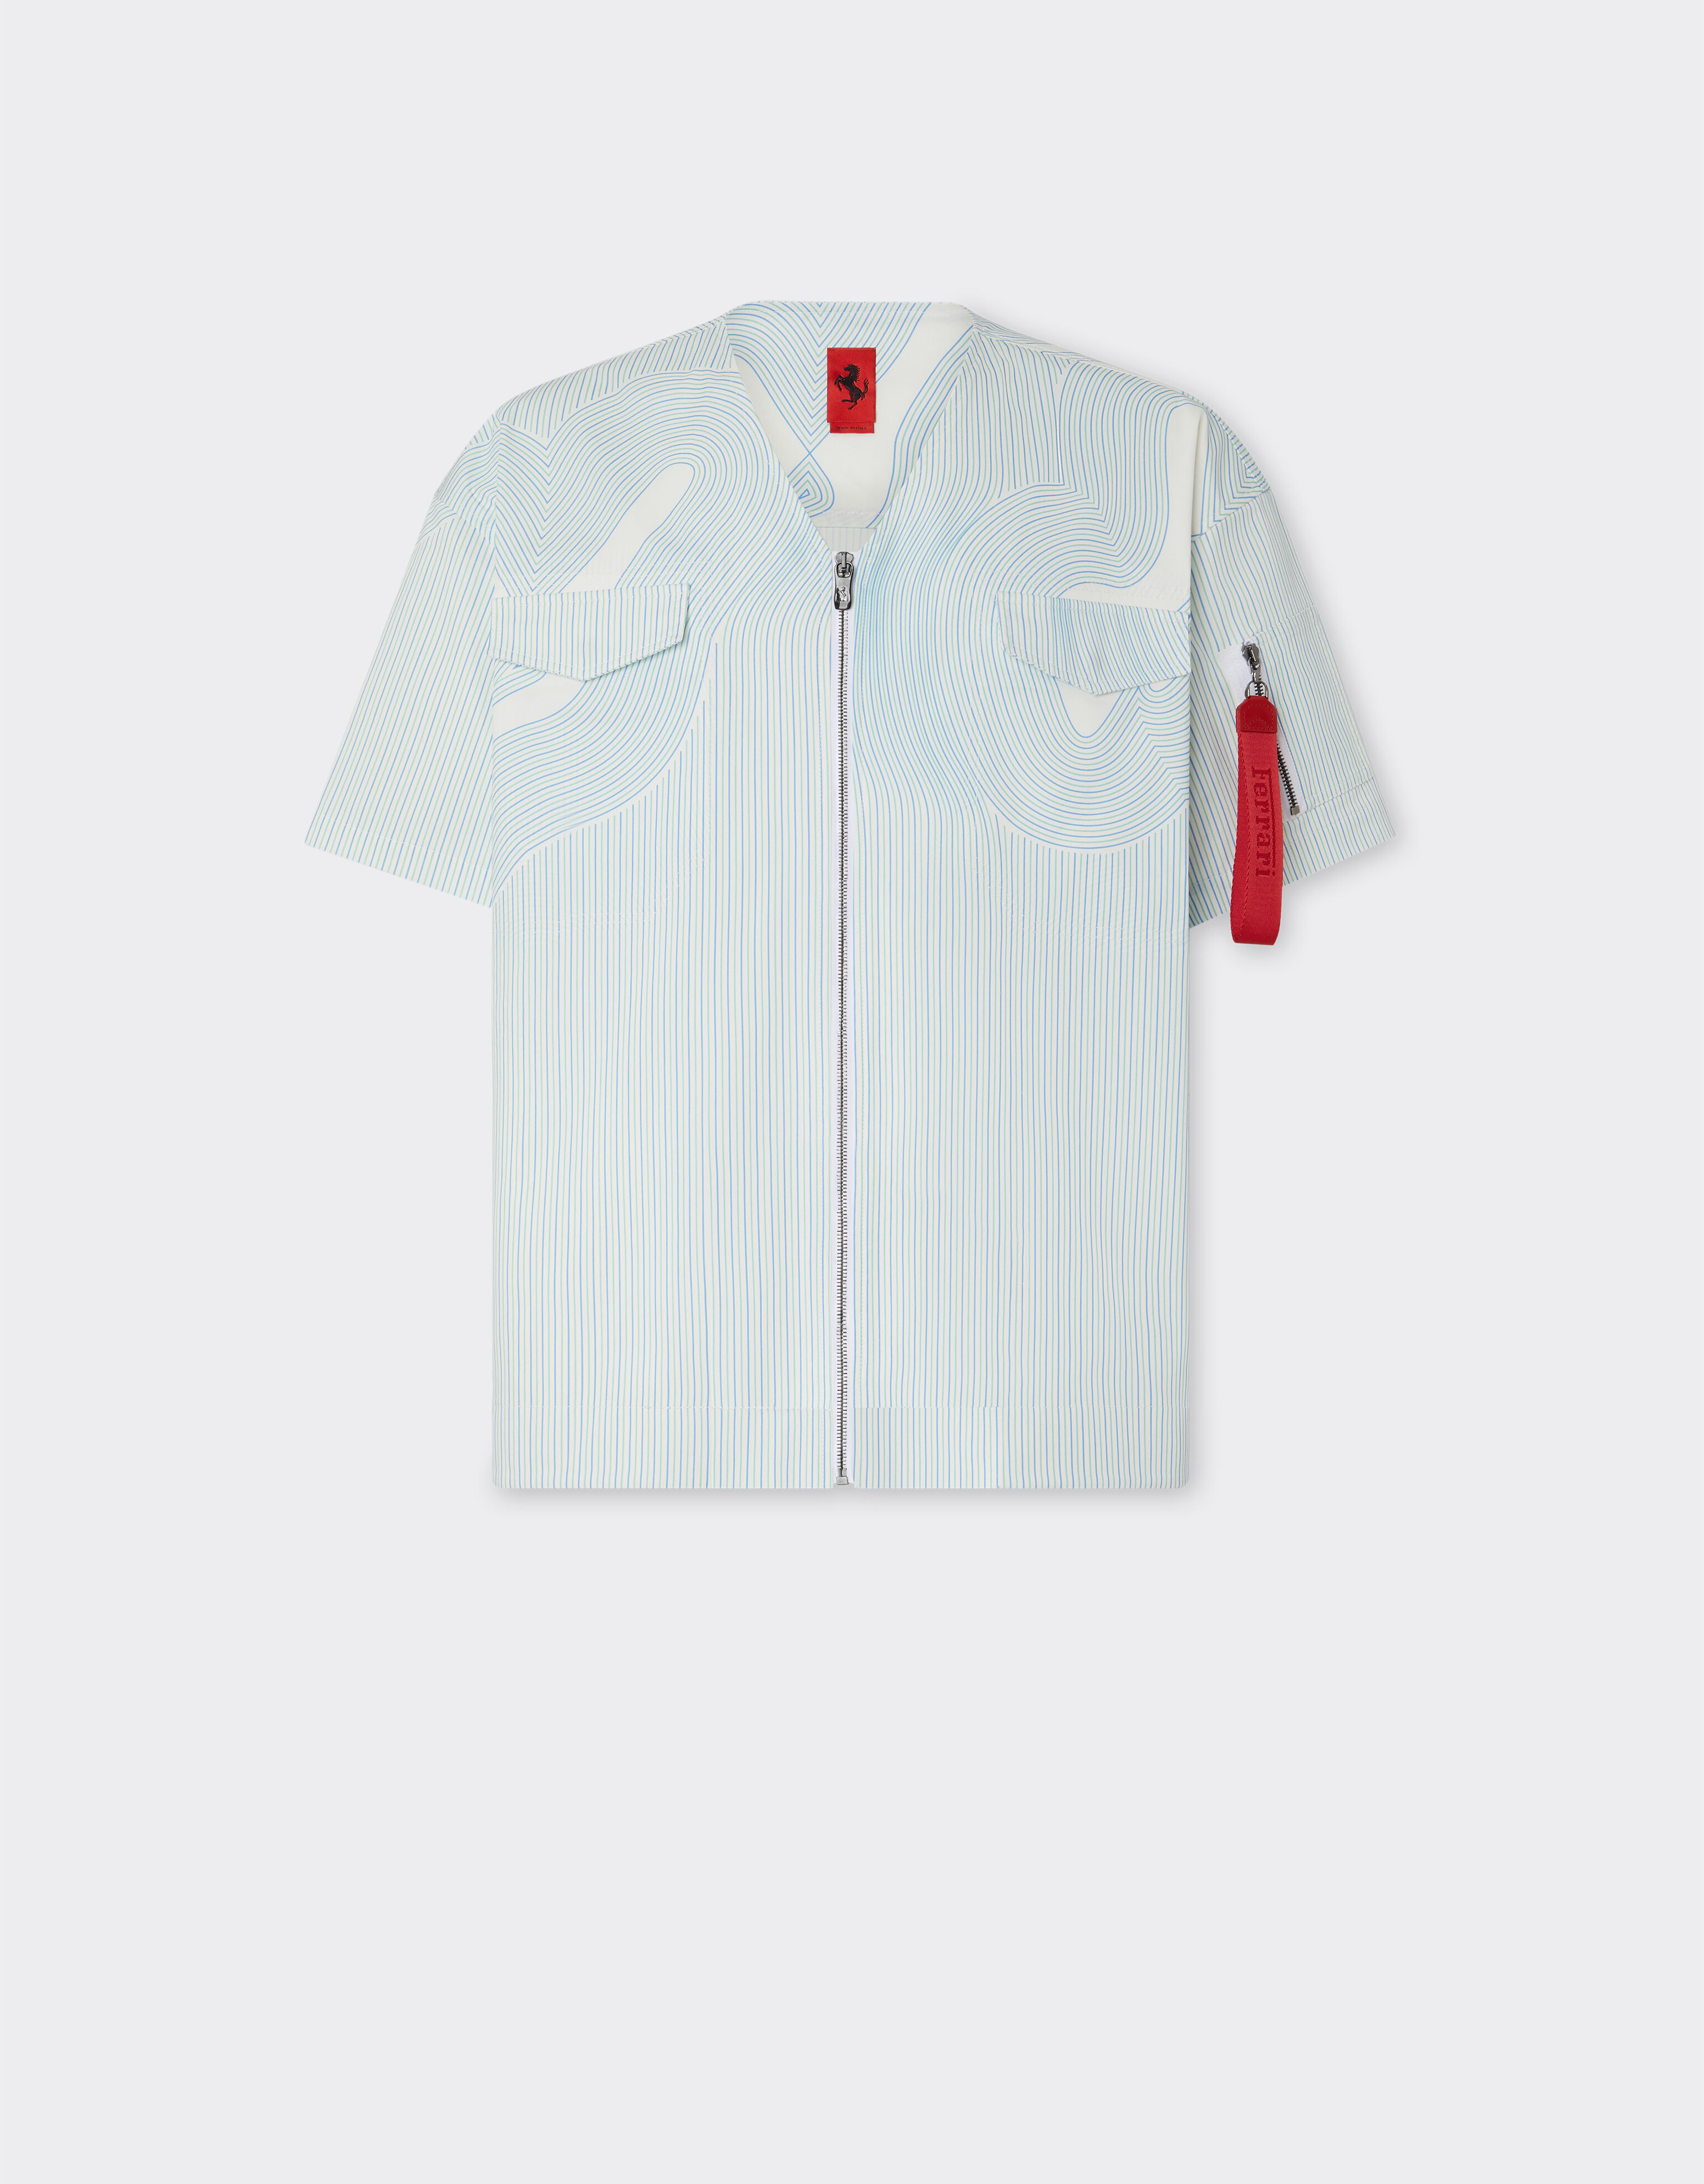 Ferrari Cotton baseball shirt with short sleeves Giallo Modena 48314f